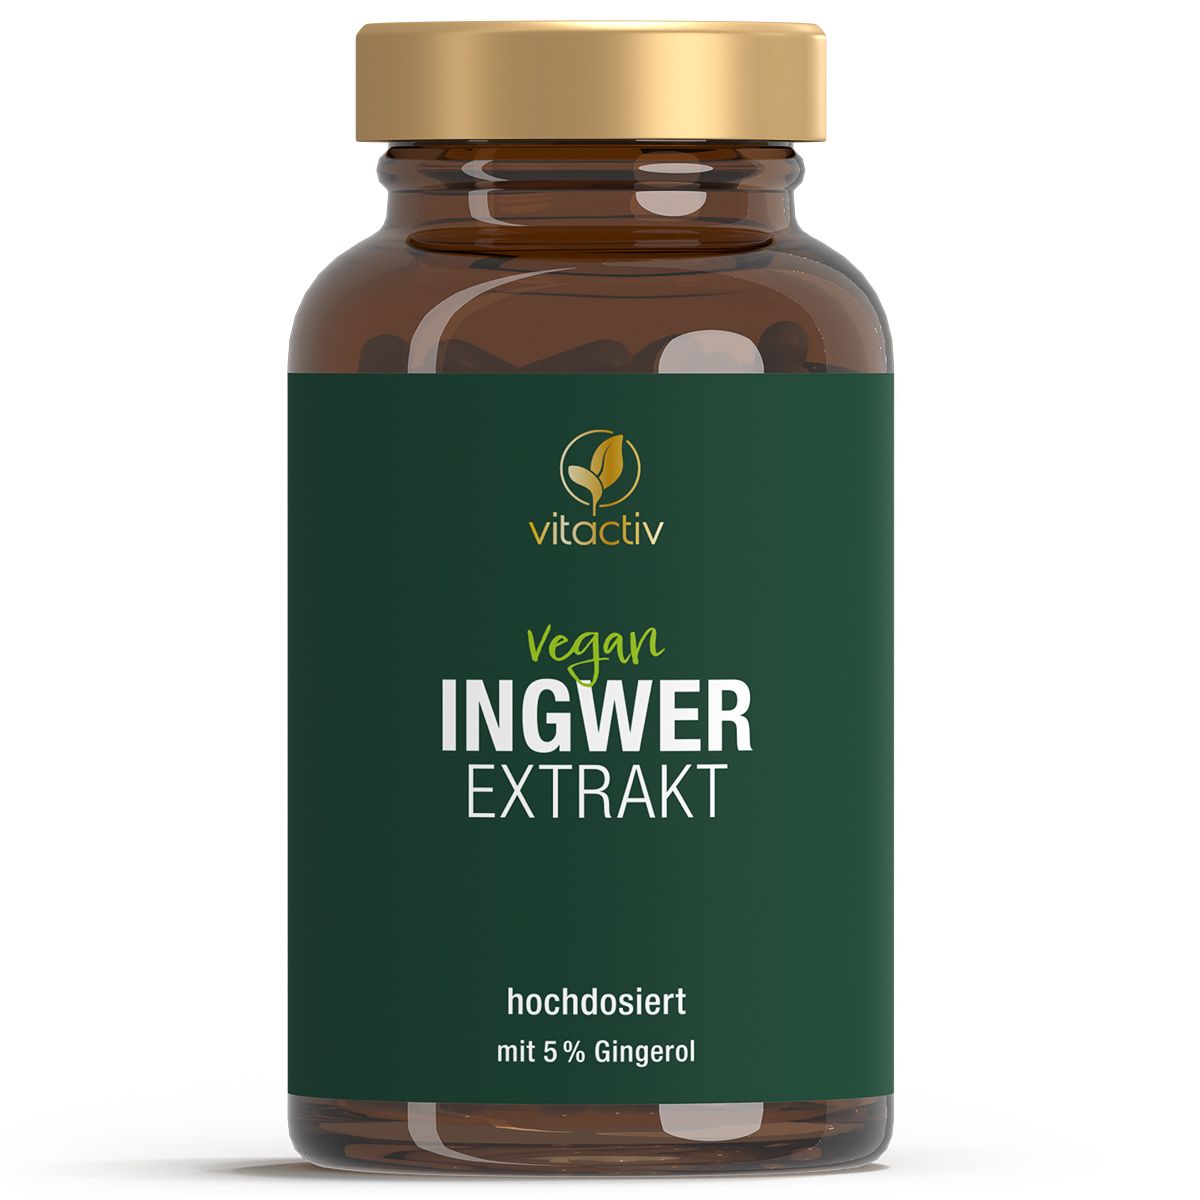 Vitactiv Ingwer Extrakt